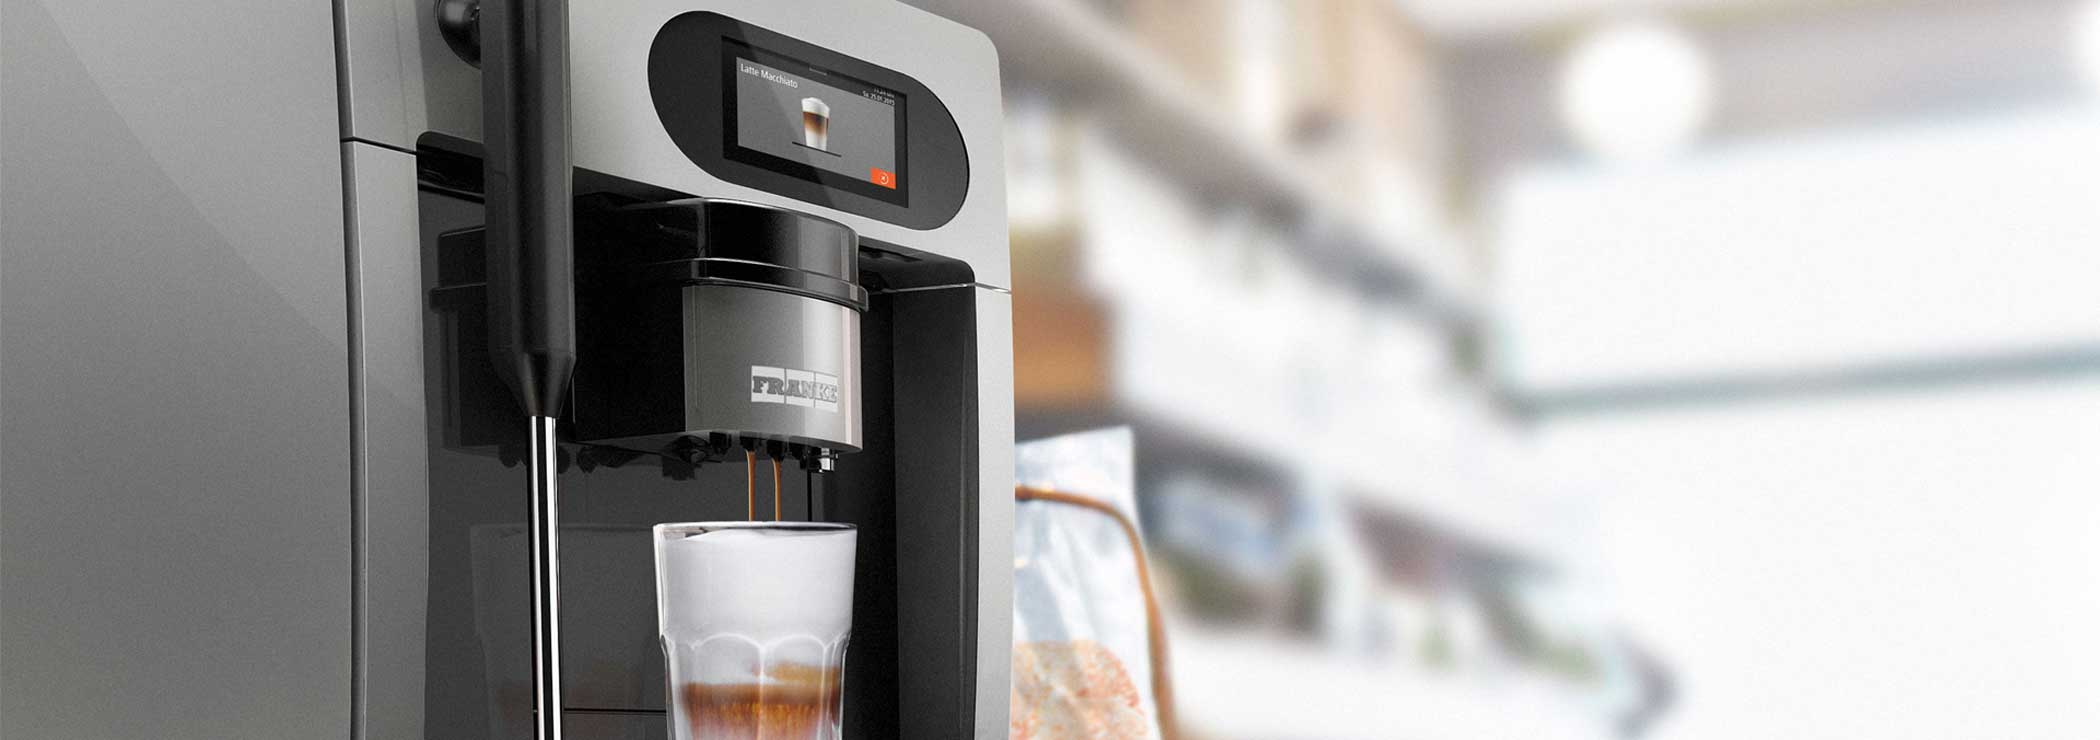 A200 professional coffee machine